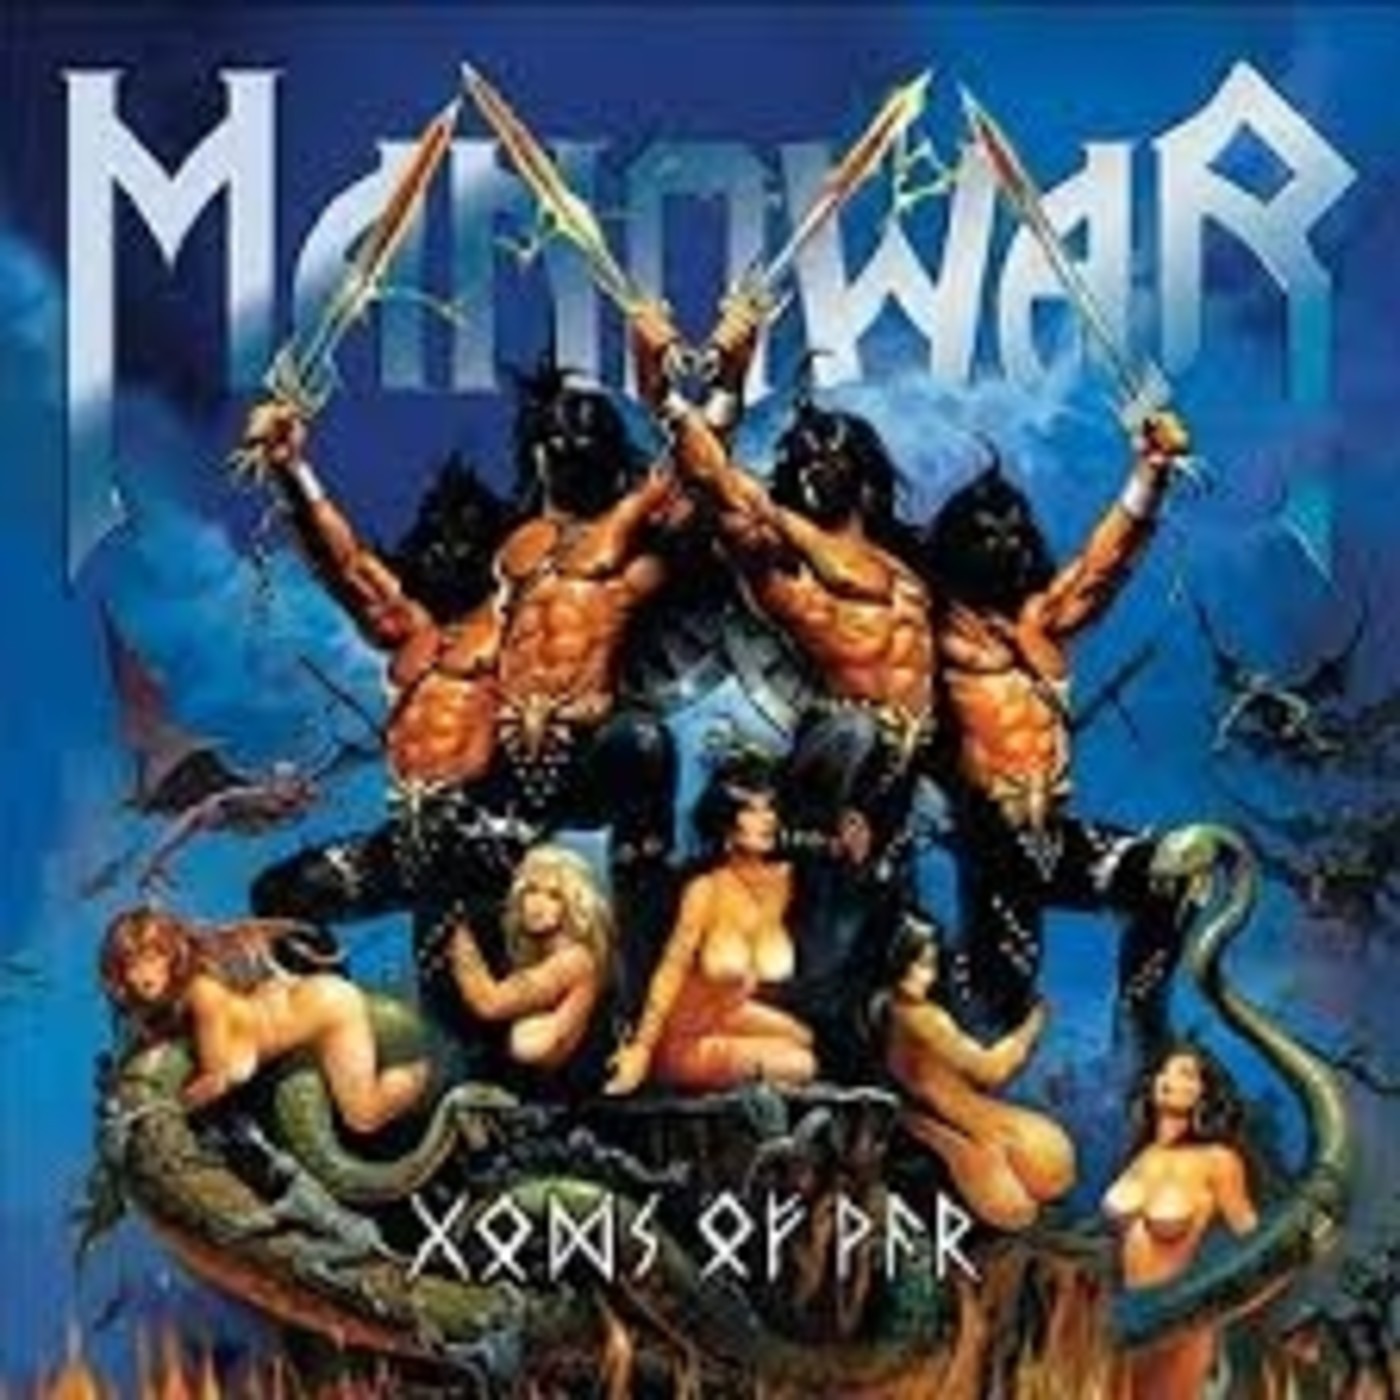 manowar warriors of the world album mp3 download